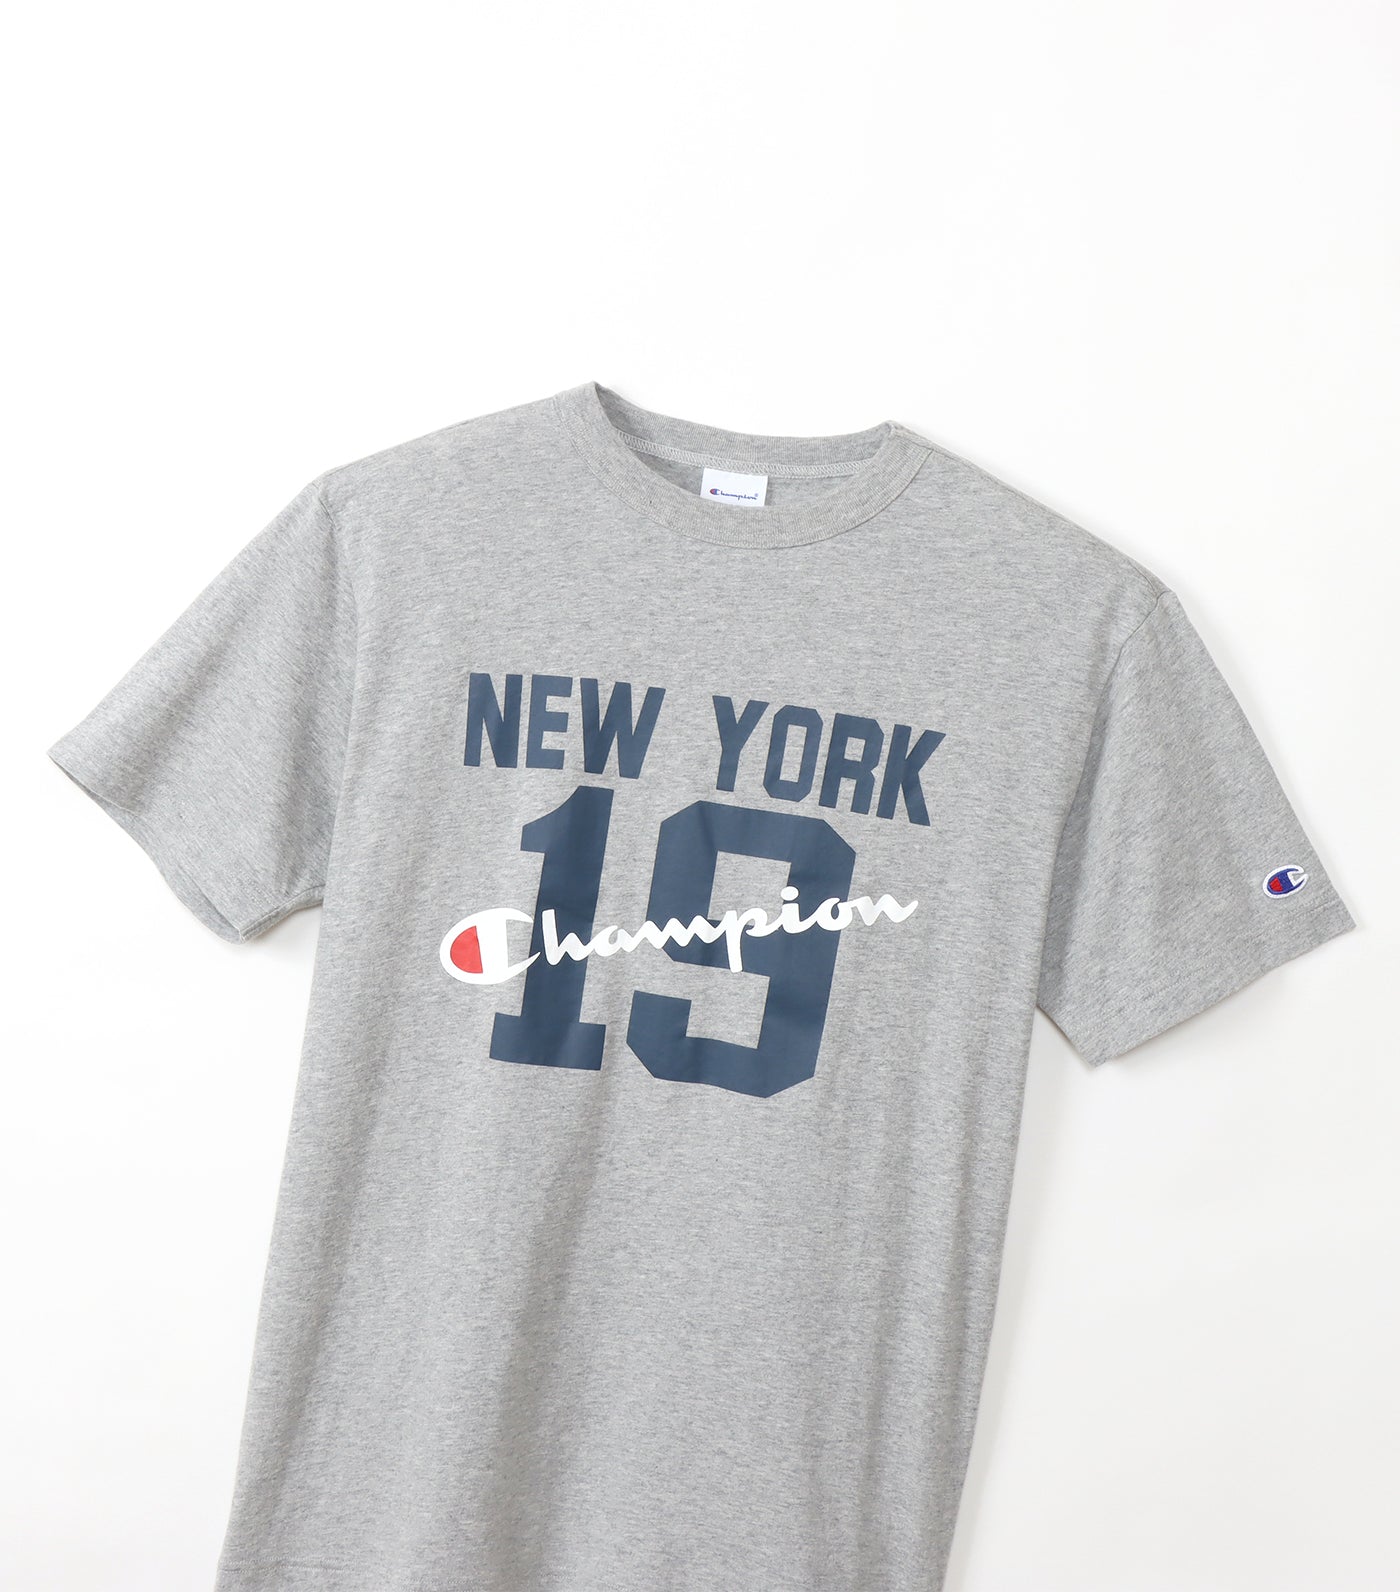 Japan Line Short Sleeve T-Shirt Oxford Gray